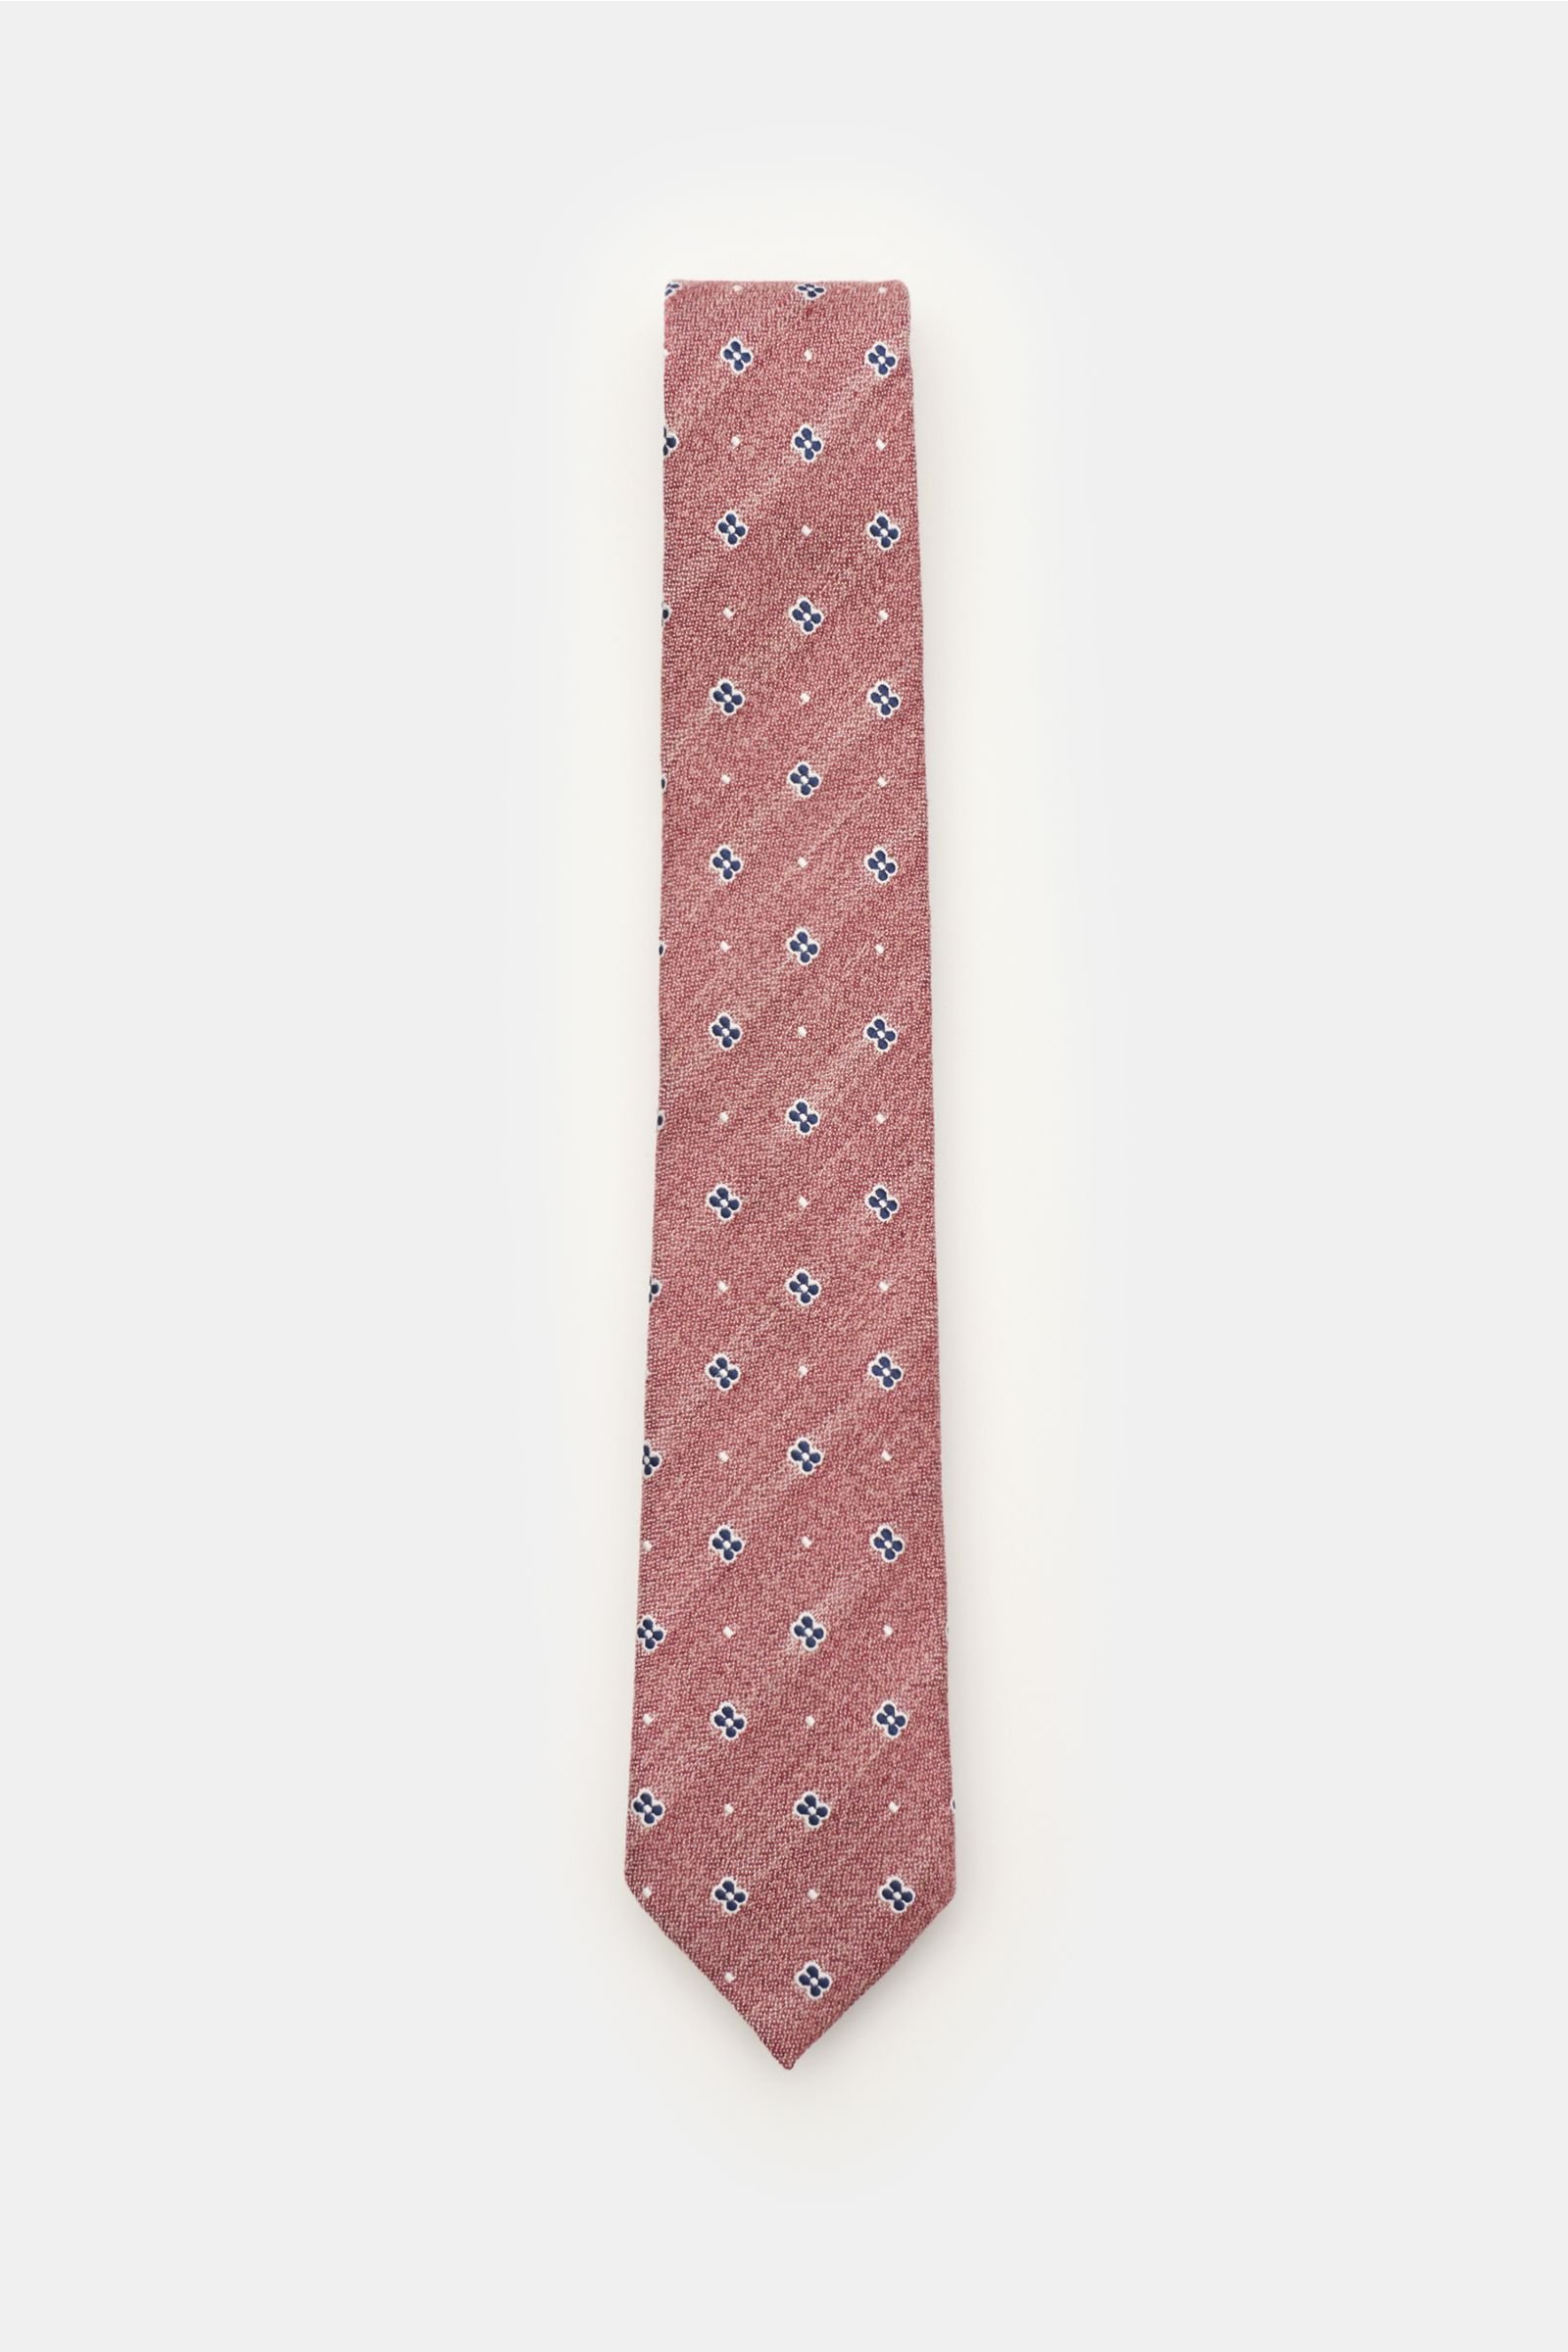 Krawatte altrosa/navy gemustert